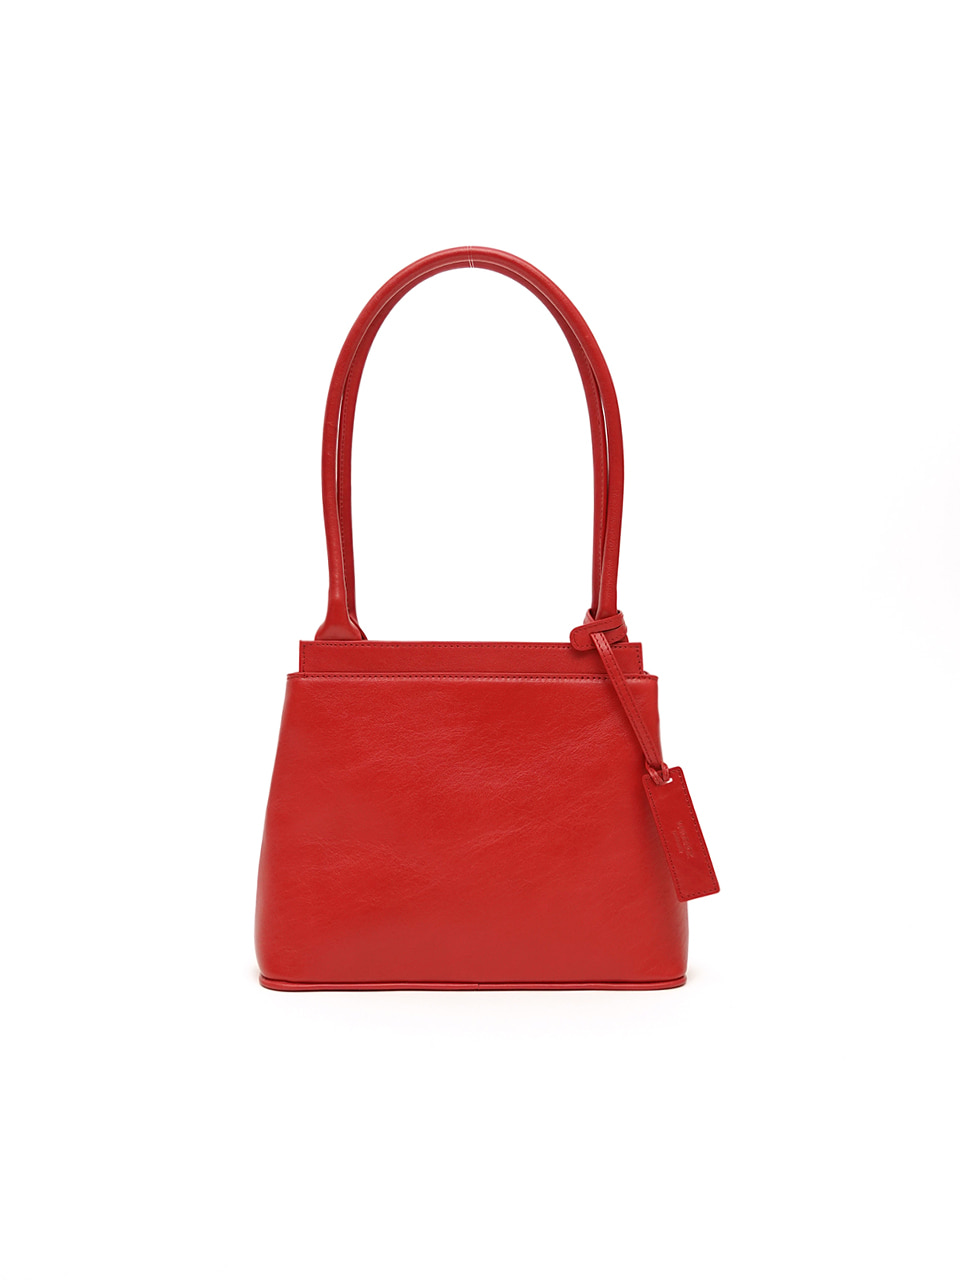 [Spring sale 20% off] Lano bag / red